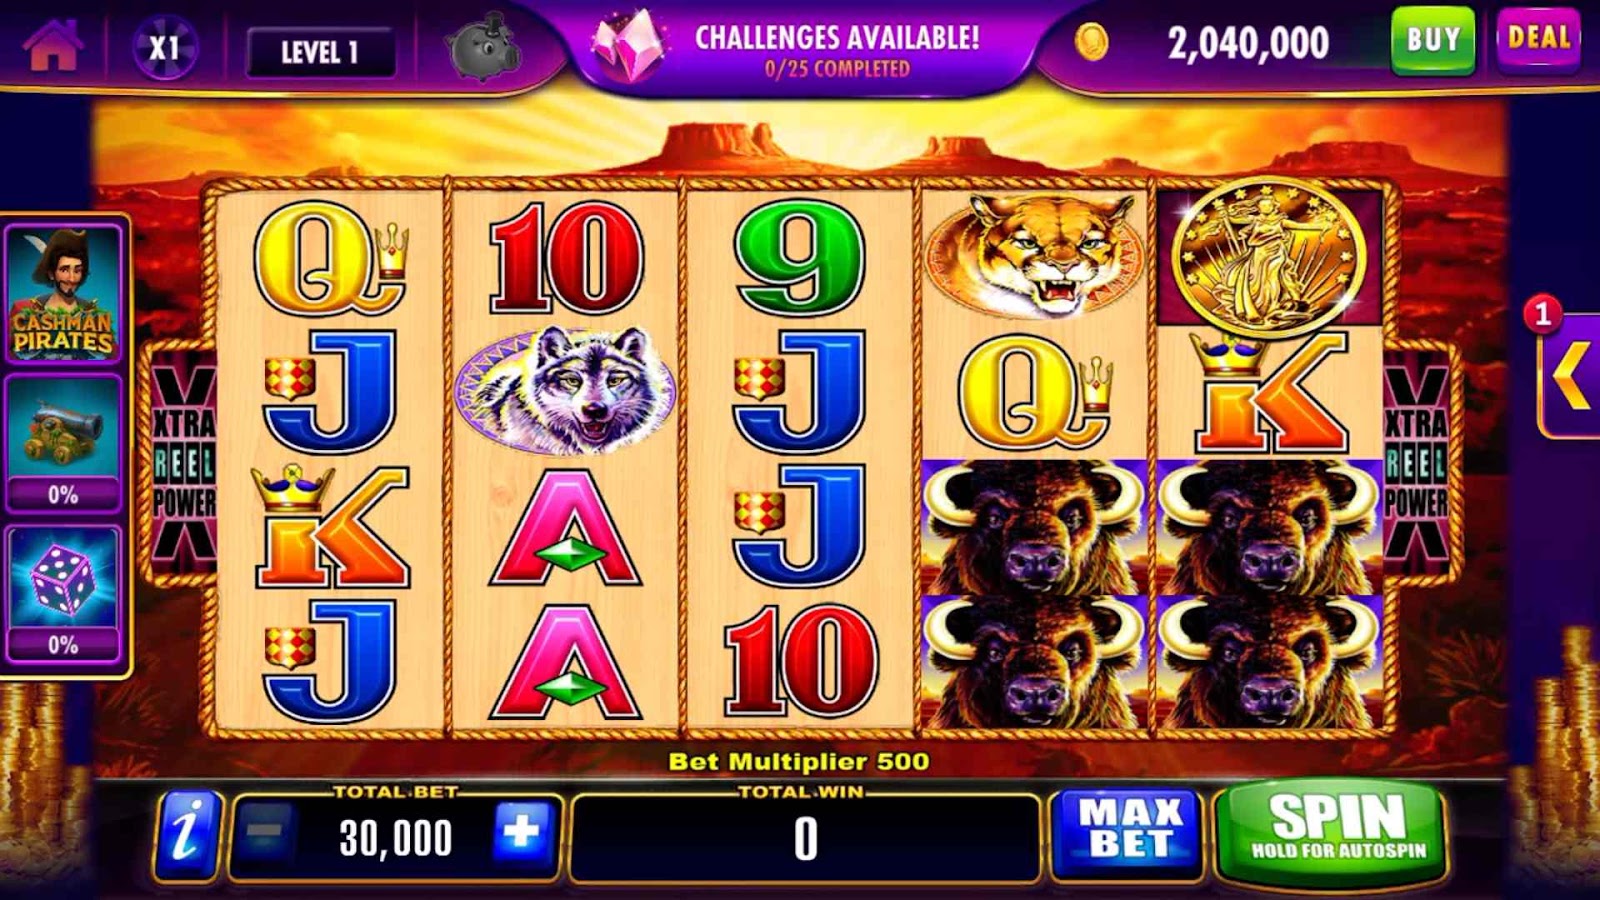 Cashman Casino Las Vegas Slots on PC